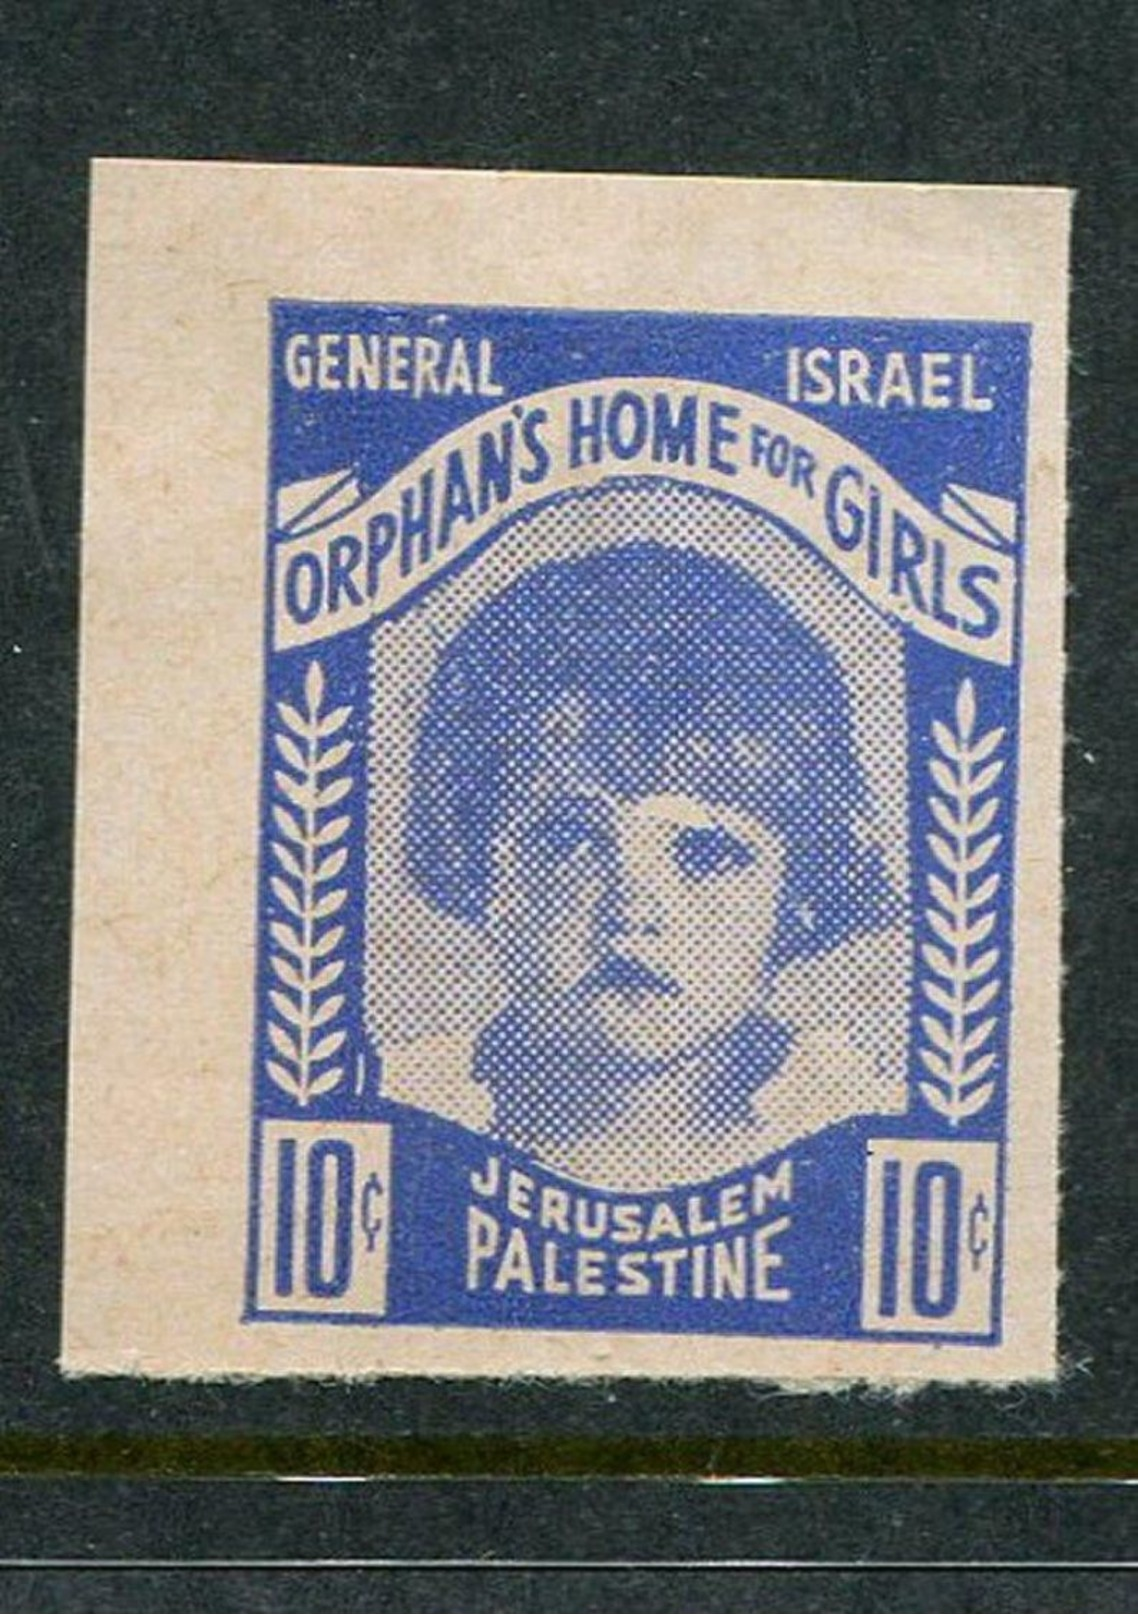 General Israel Orphans Home For Girls Reklamemarke Poster Stamp Vignette Hinged 1 X 1 3/8" - Cinderellas